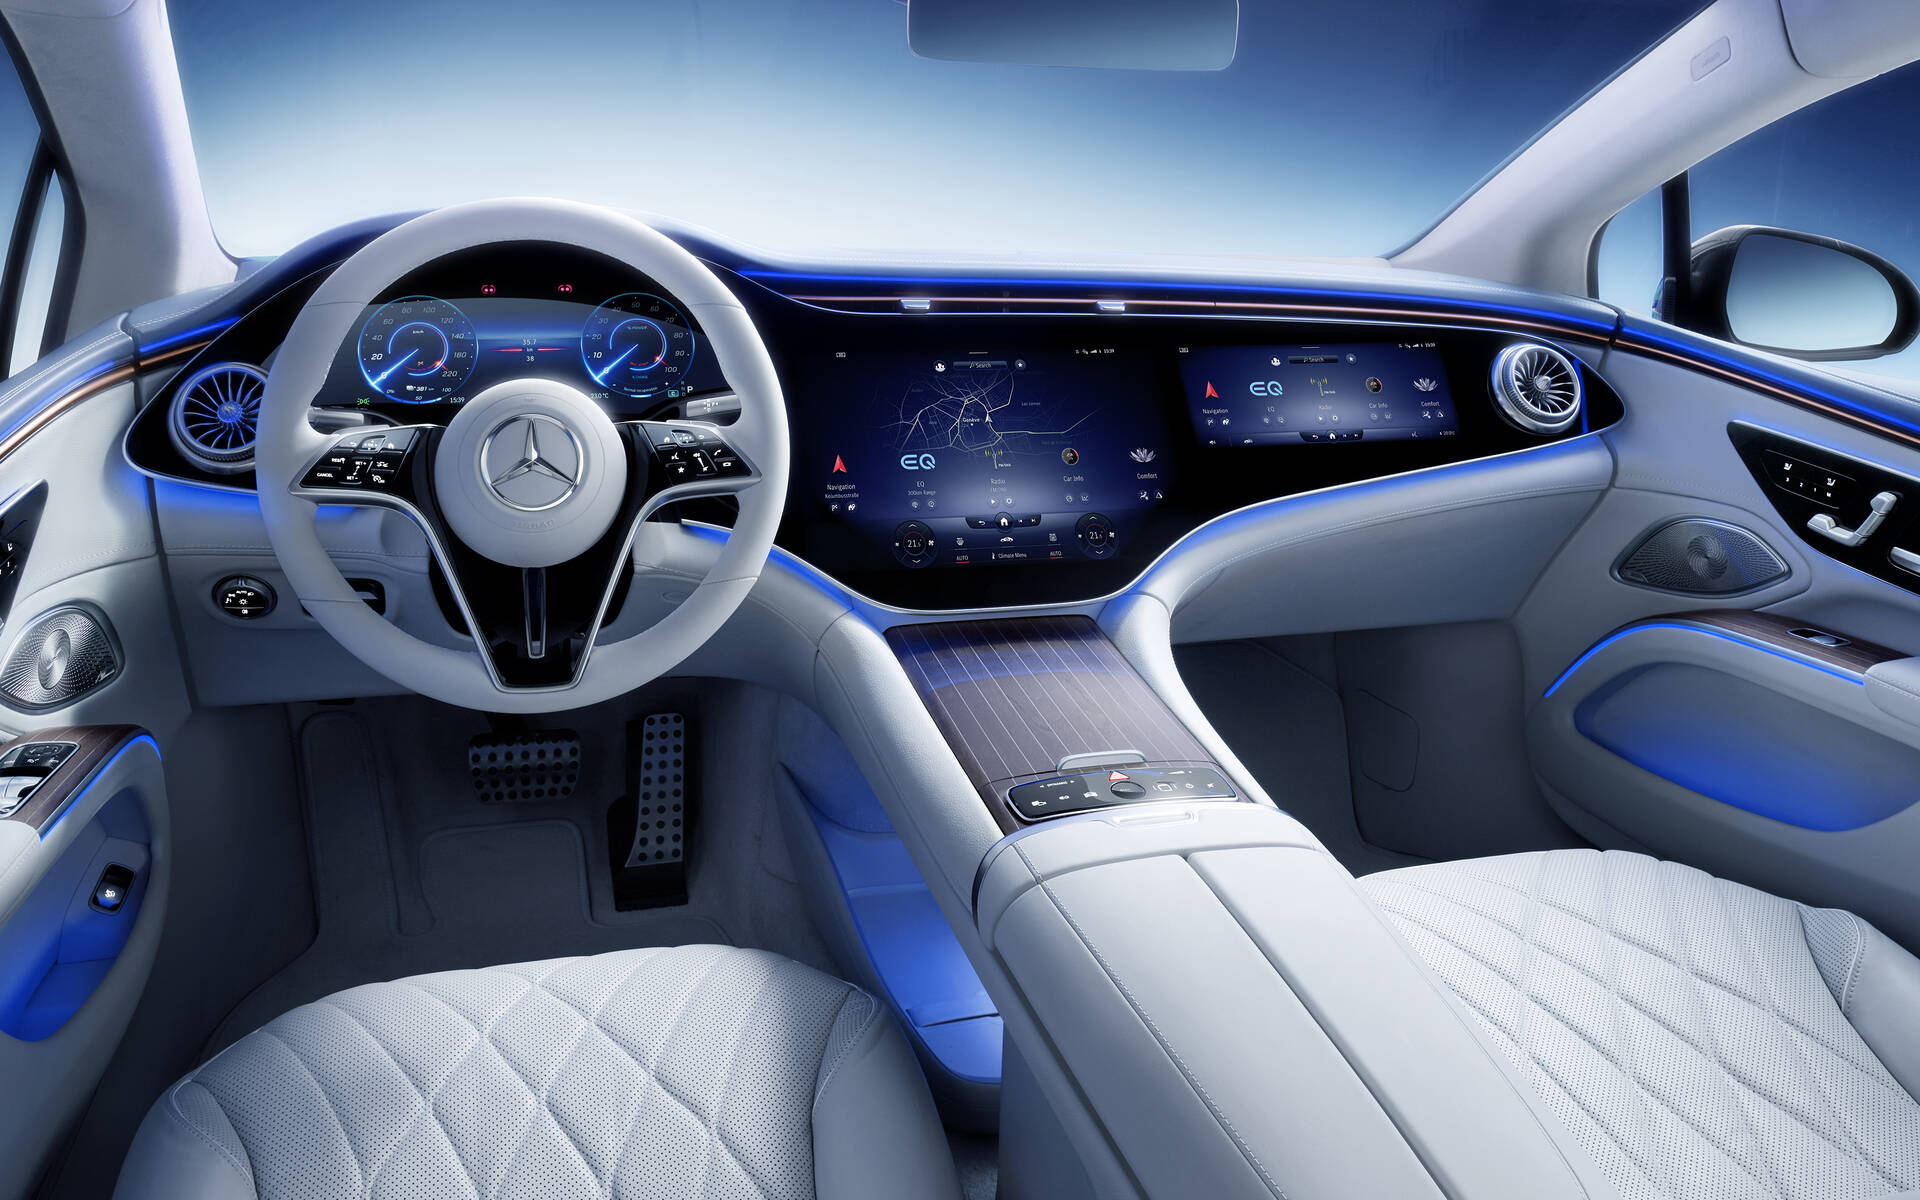 The 10 Best Car Interiors of 2022 According to WardsAuto 1/11